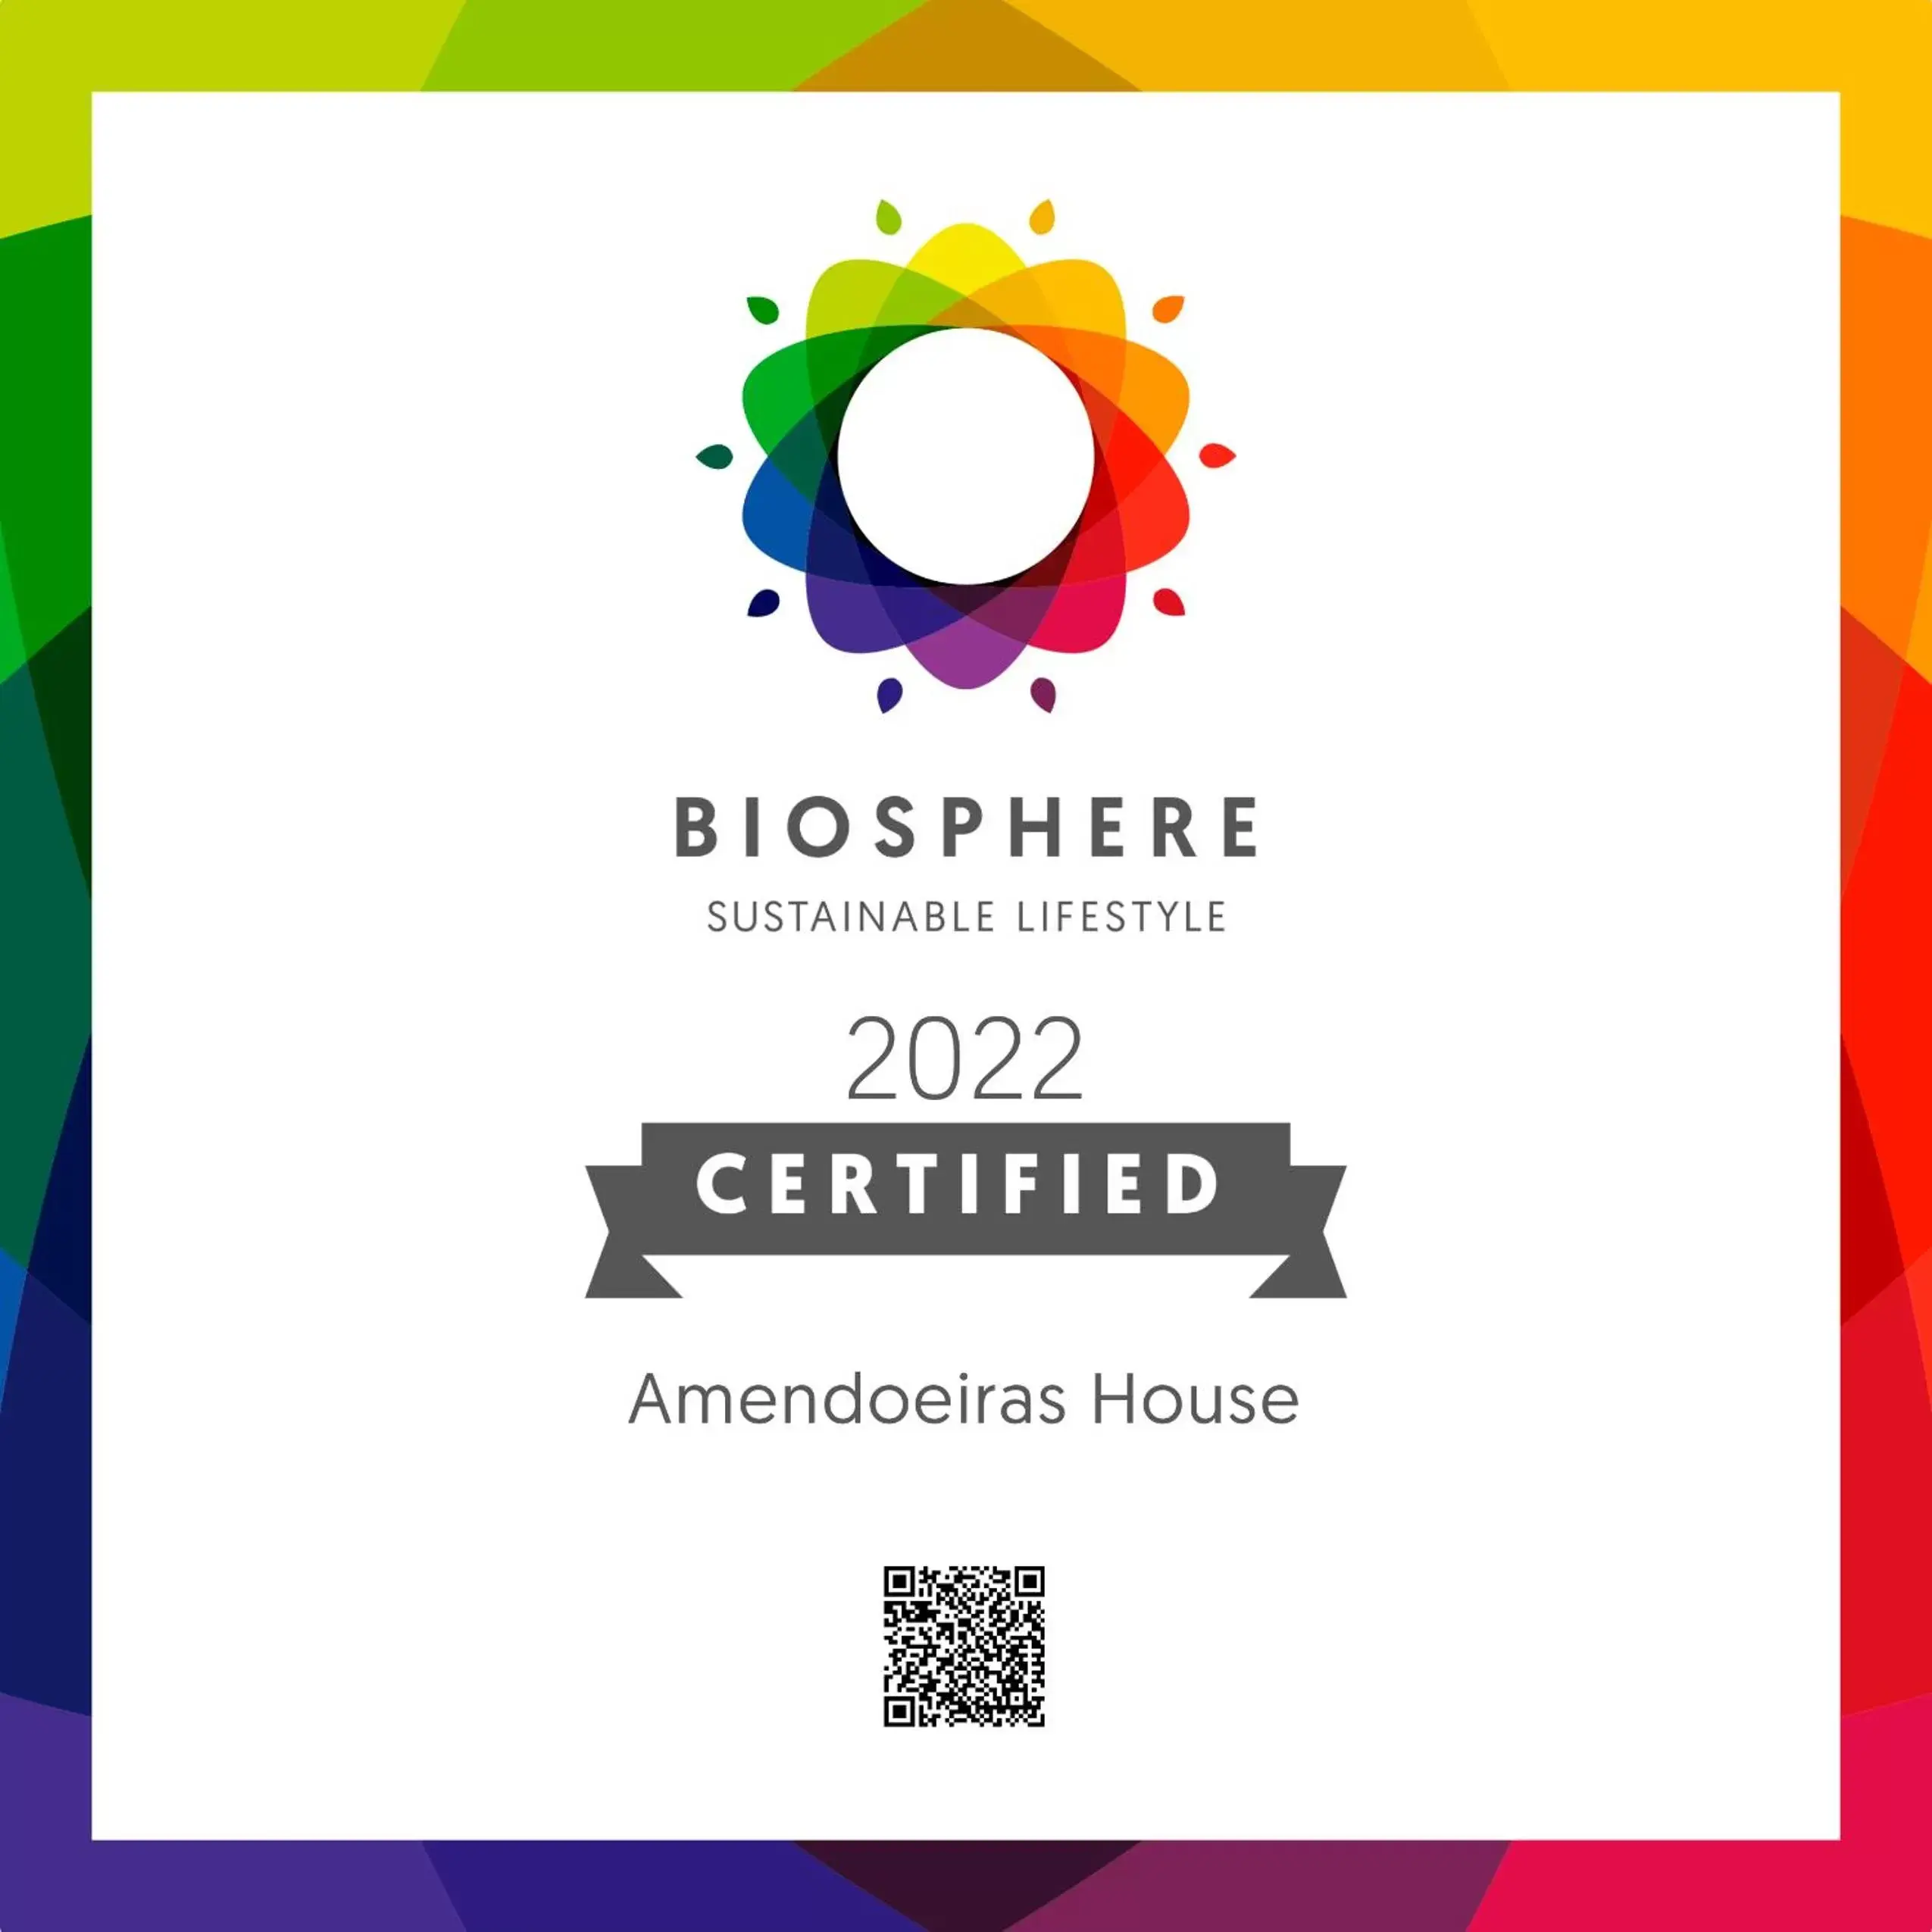 Certificate/Award in AmendoeirasHouse